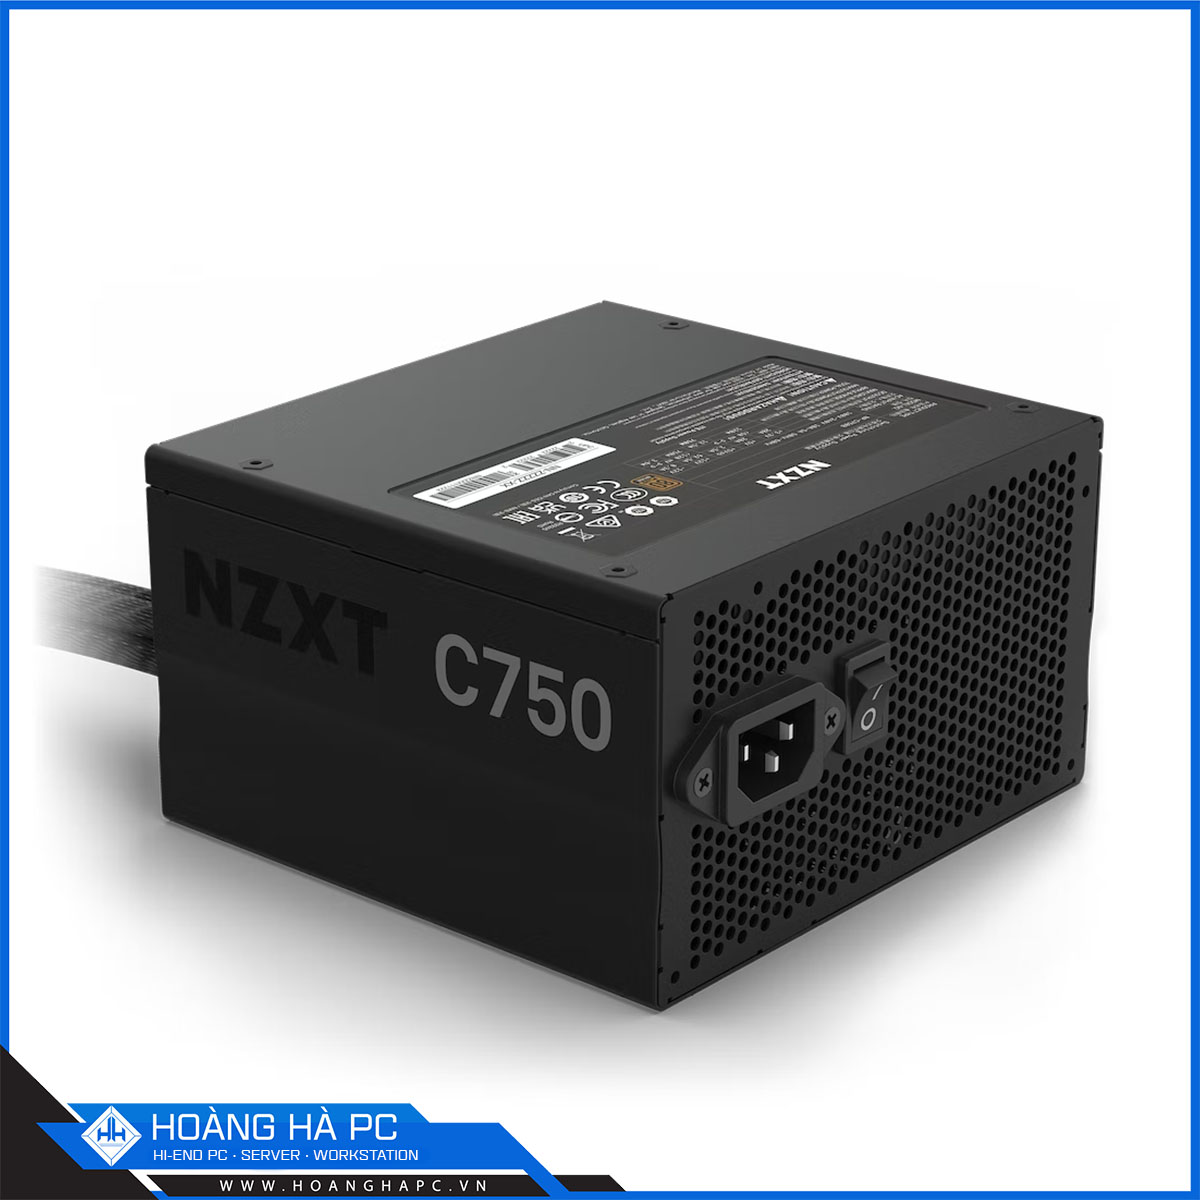 NZXT C750 750W